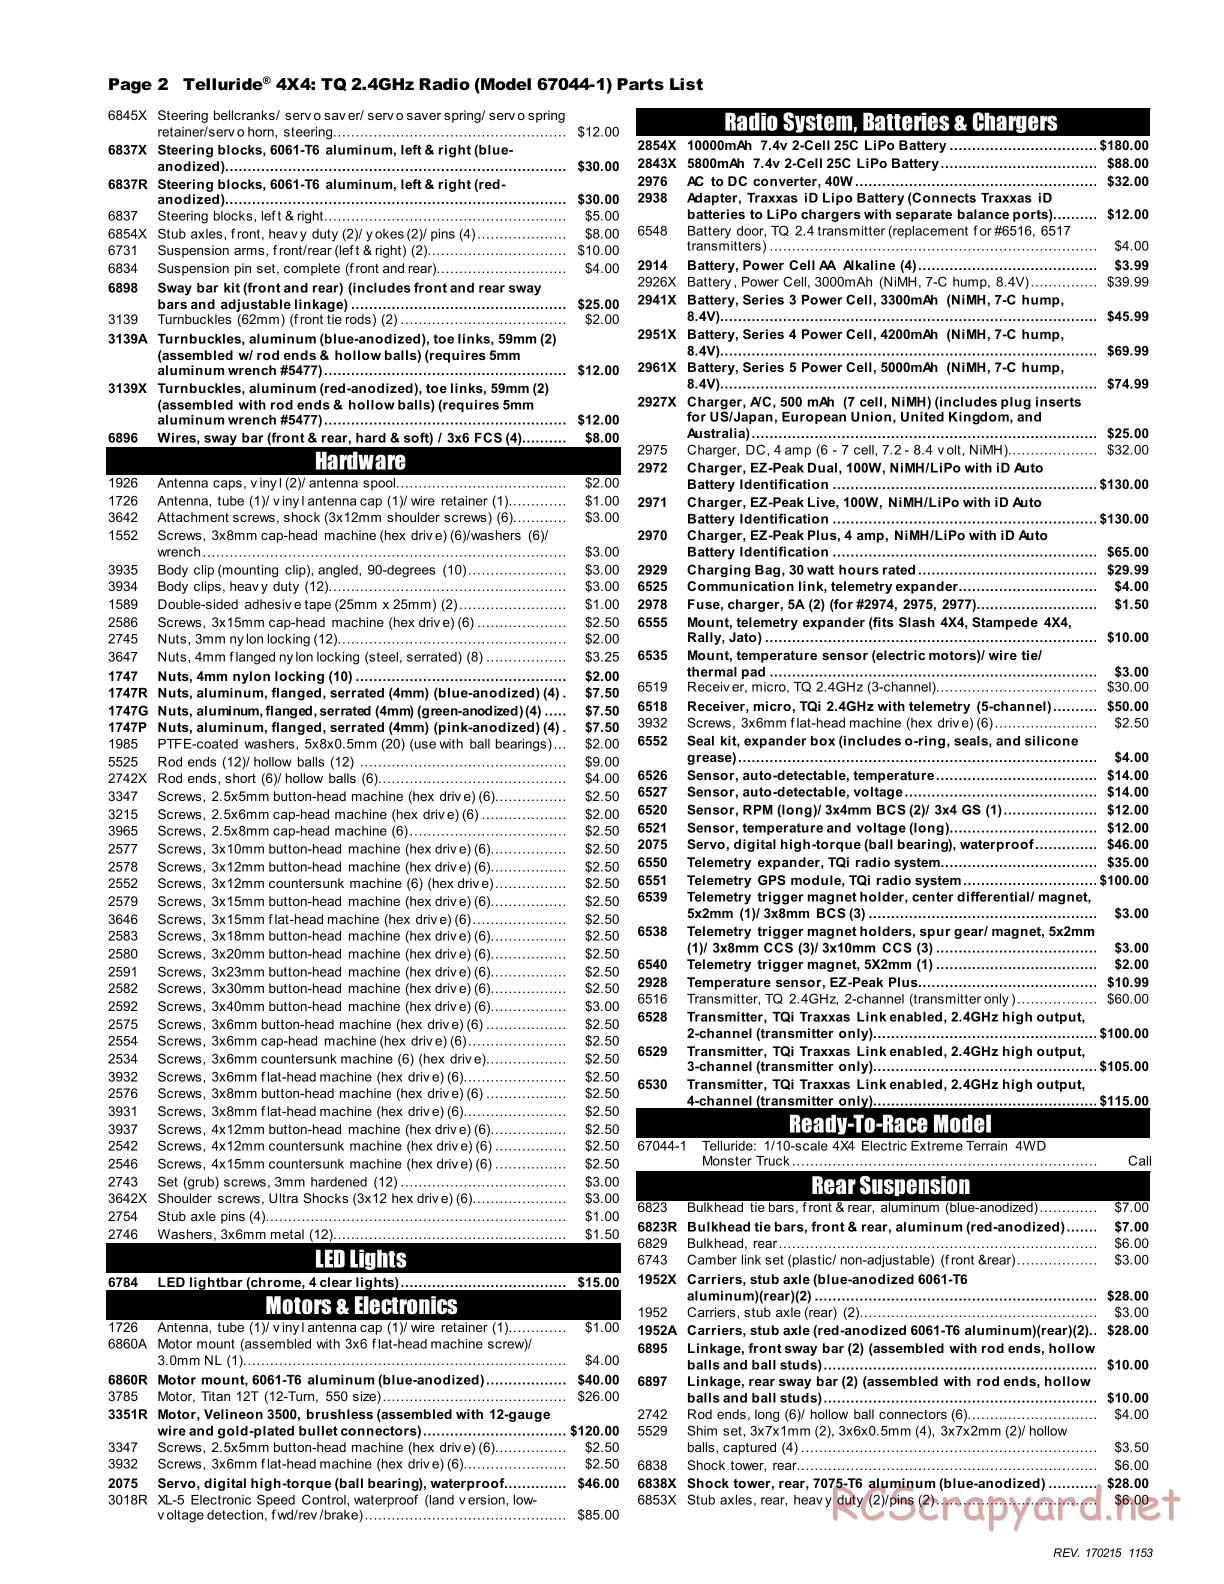 Traxxas - Telluride 4x4 (2015) - Parts List - Page 2